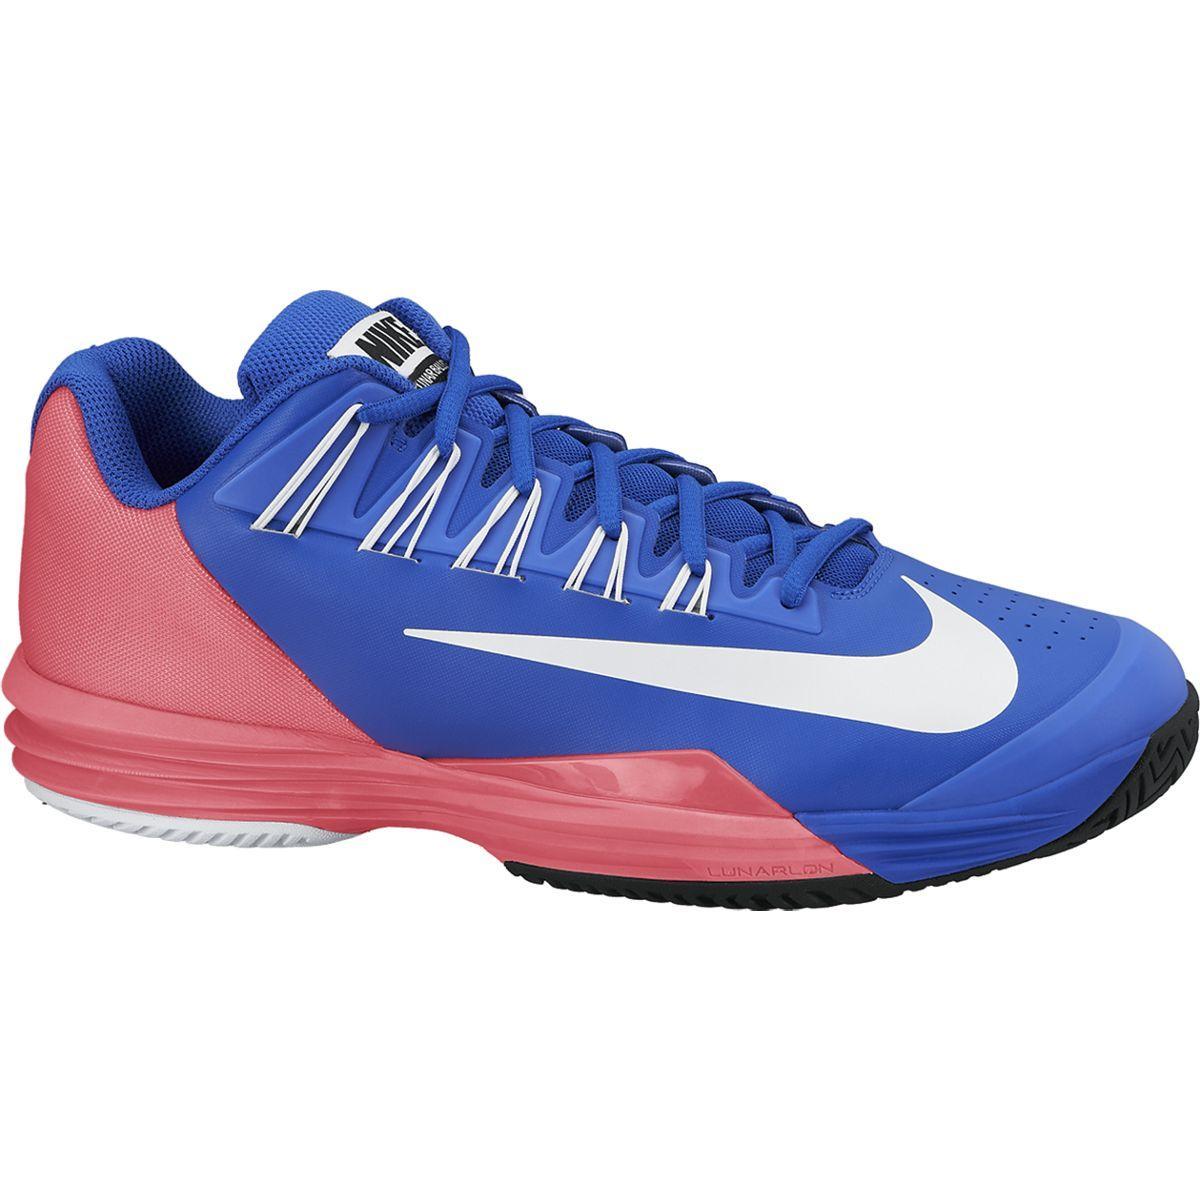 Nike Lunar Ballistec Tennis Shoes Blue/Pink -